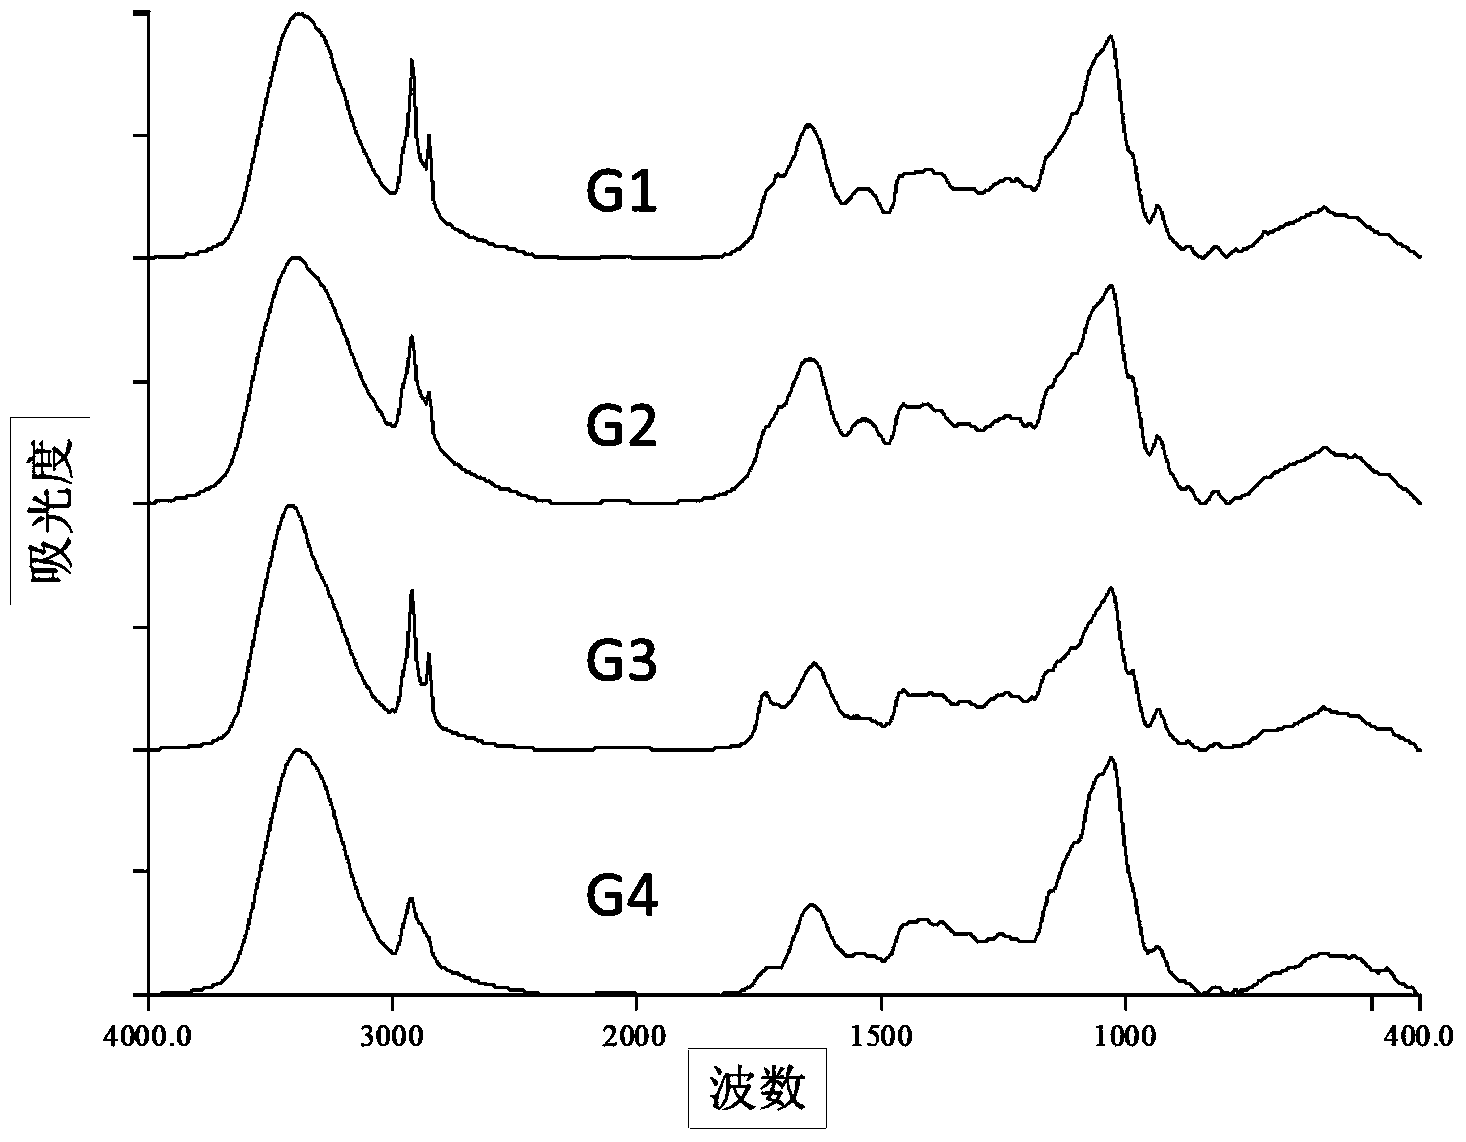 Analysis identification method of ophiocordyceps sinensis through infrared spectrum